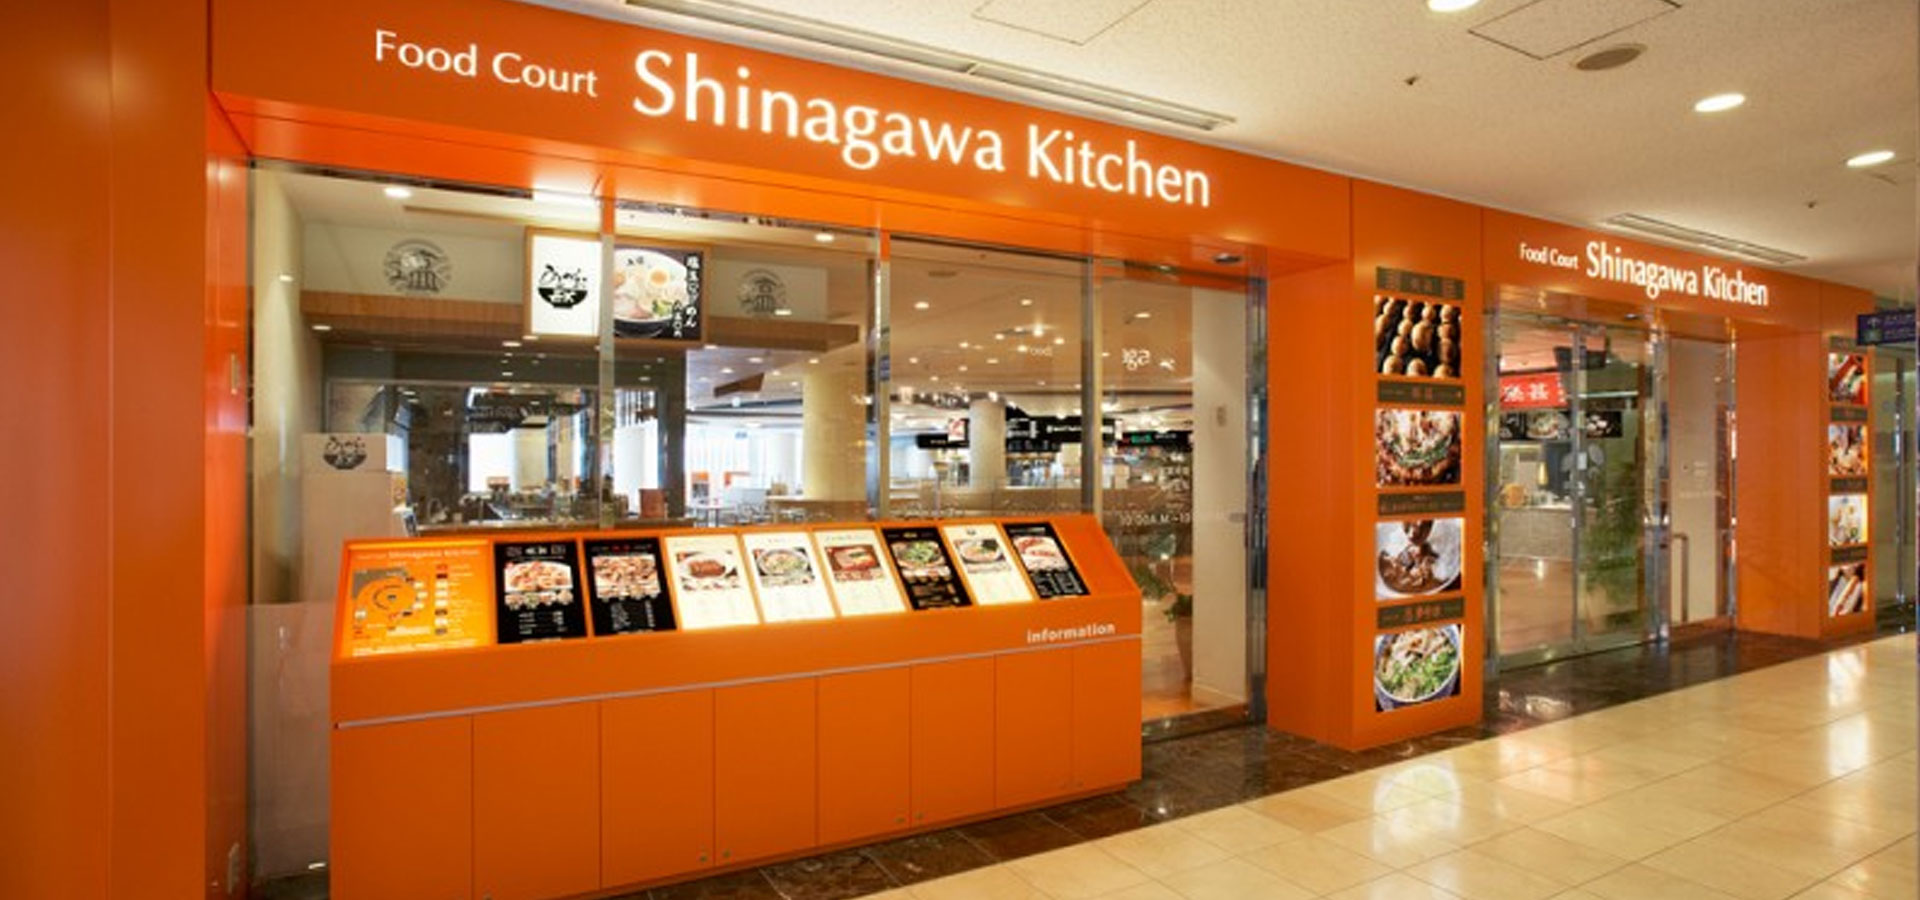 Food Court Shinagawa Kitchen